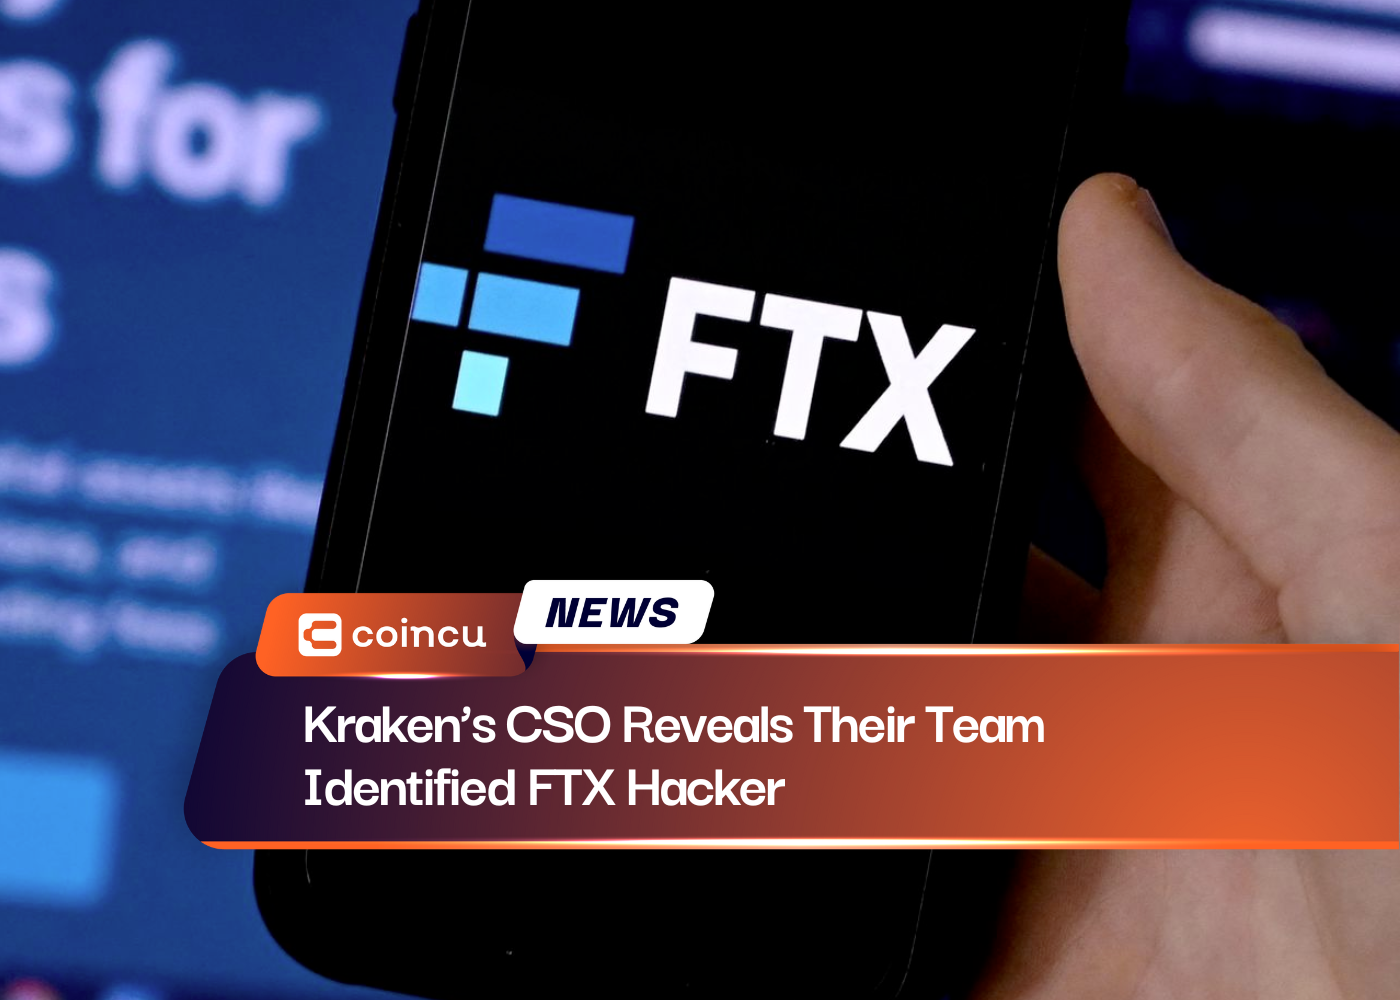 Kraken’s CSO Reveals Their Team Identified FTX Hacker